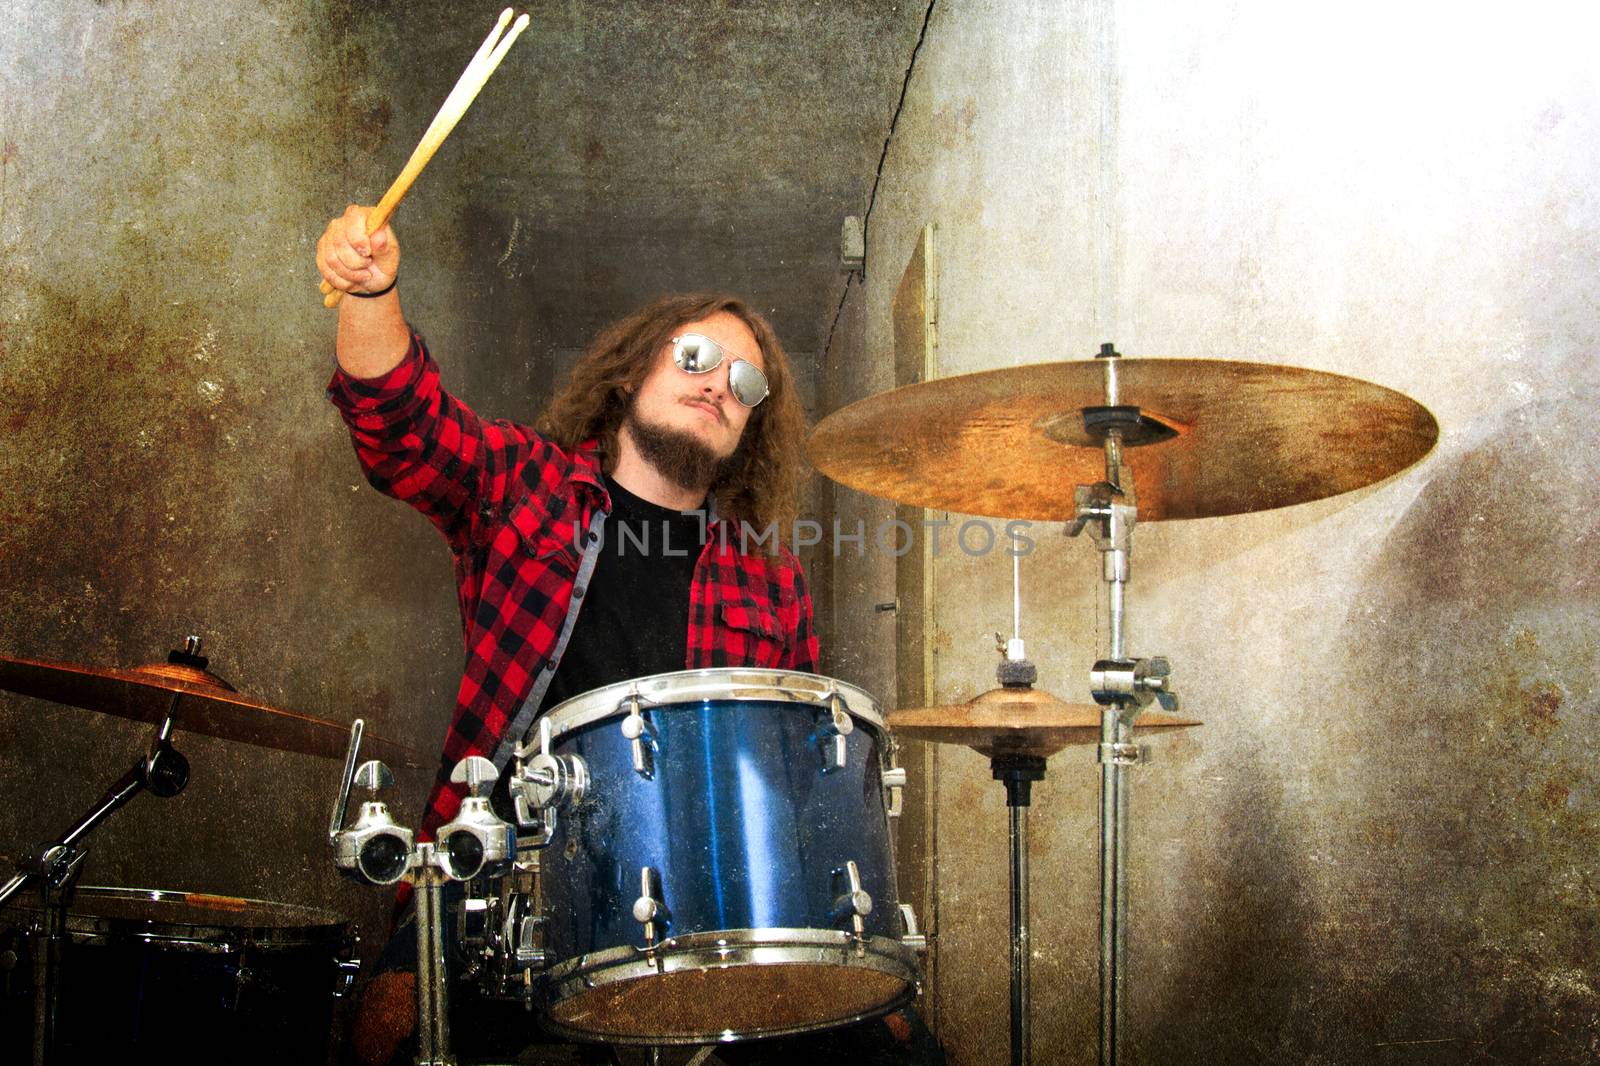 Drums conceptual image. Rock drummer and his drum set. by satariel